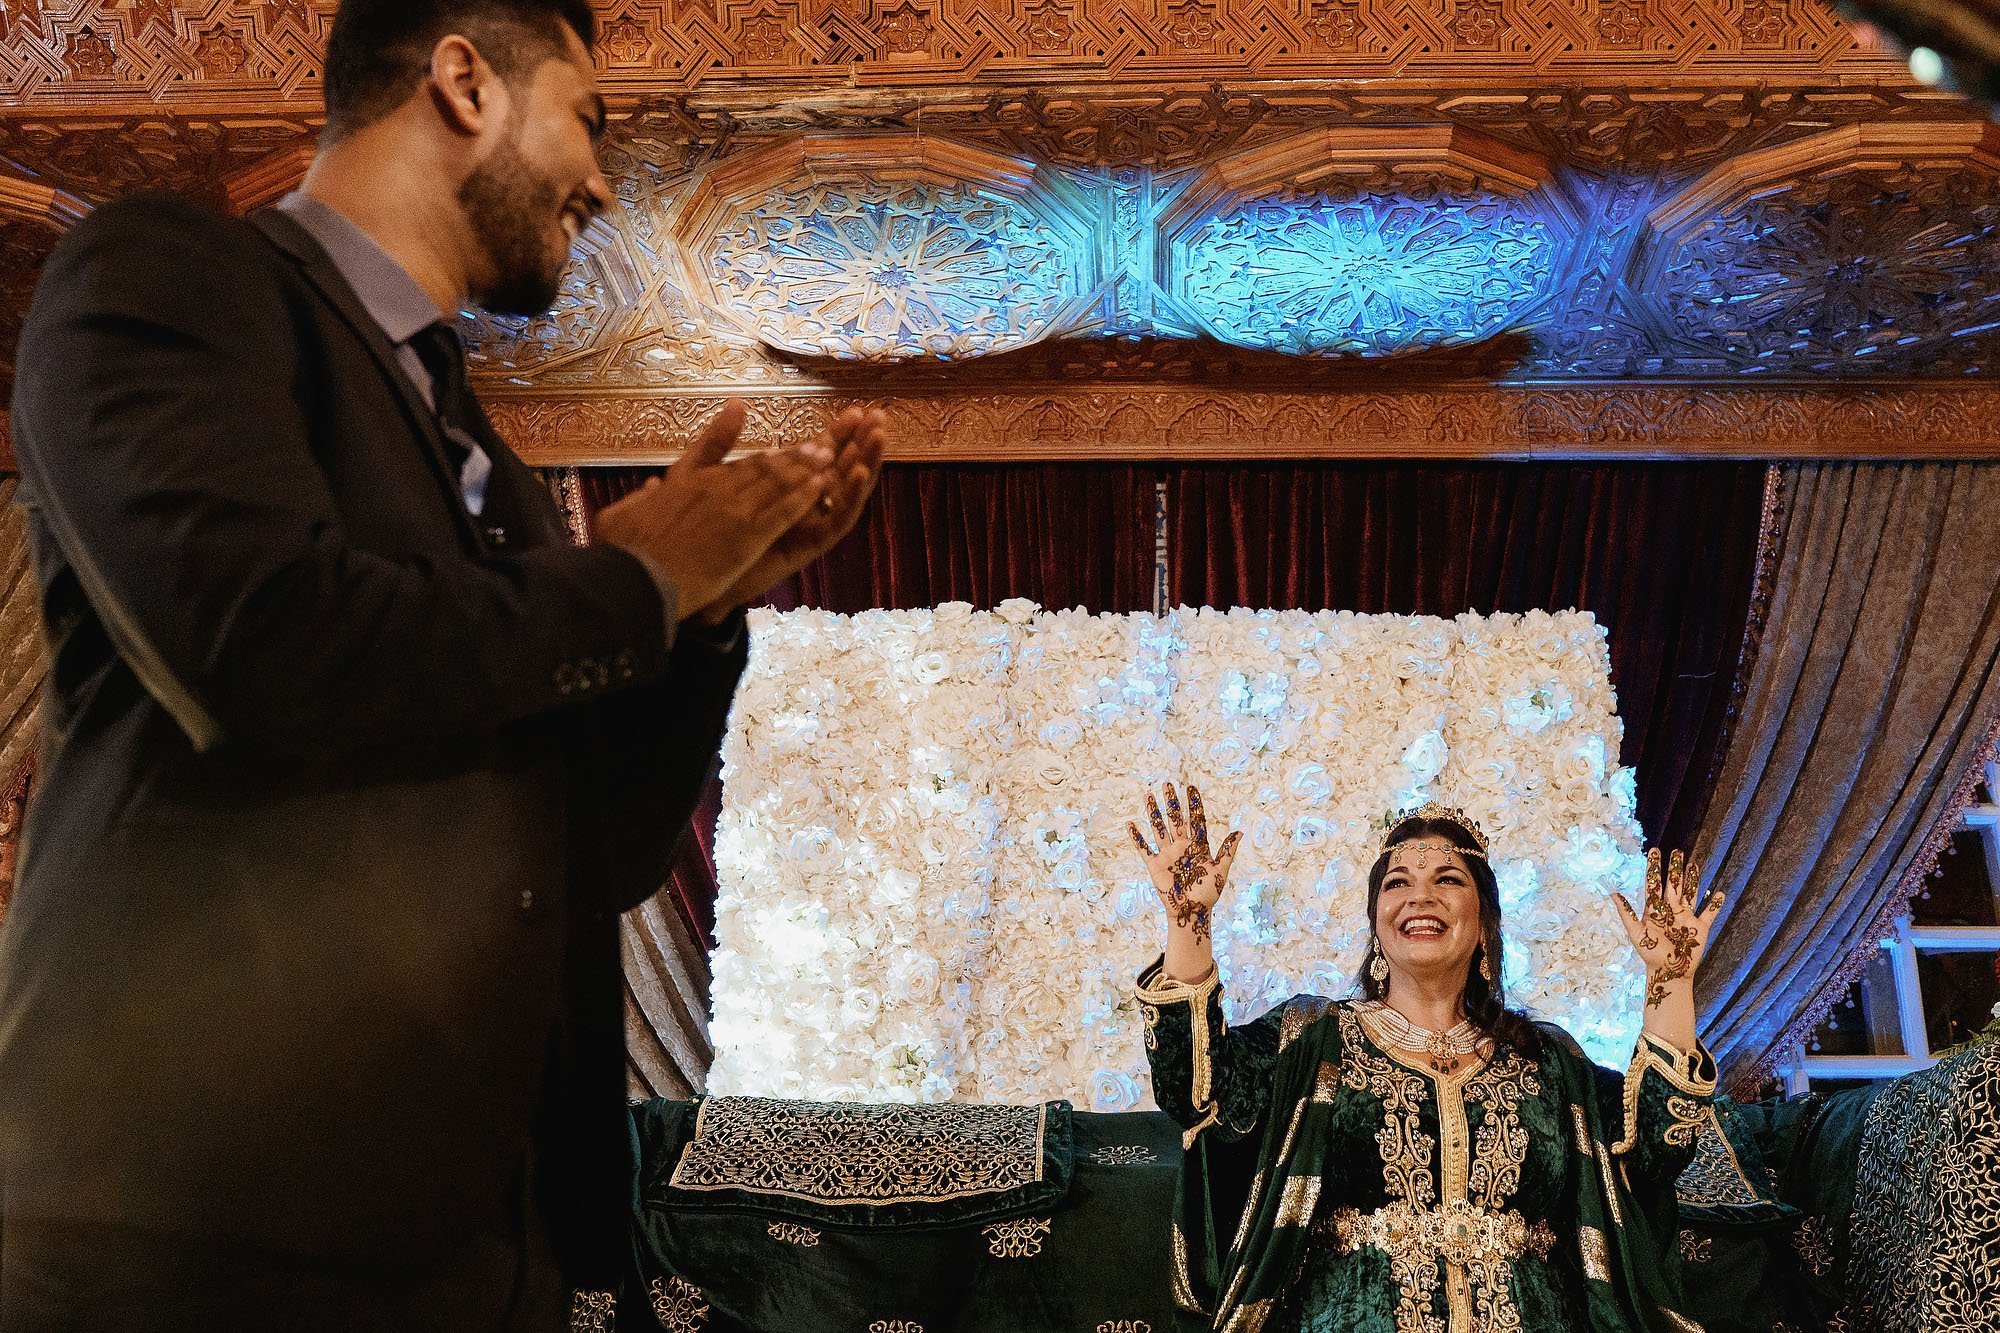 Morocco destination wedding in rabat by arj photography